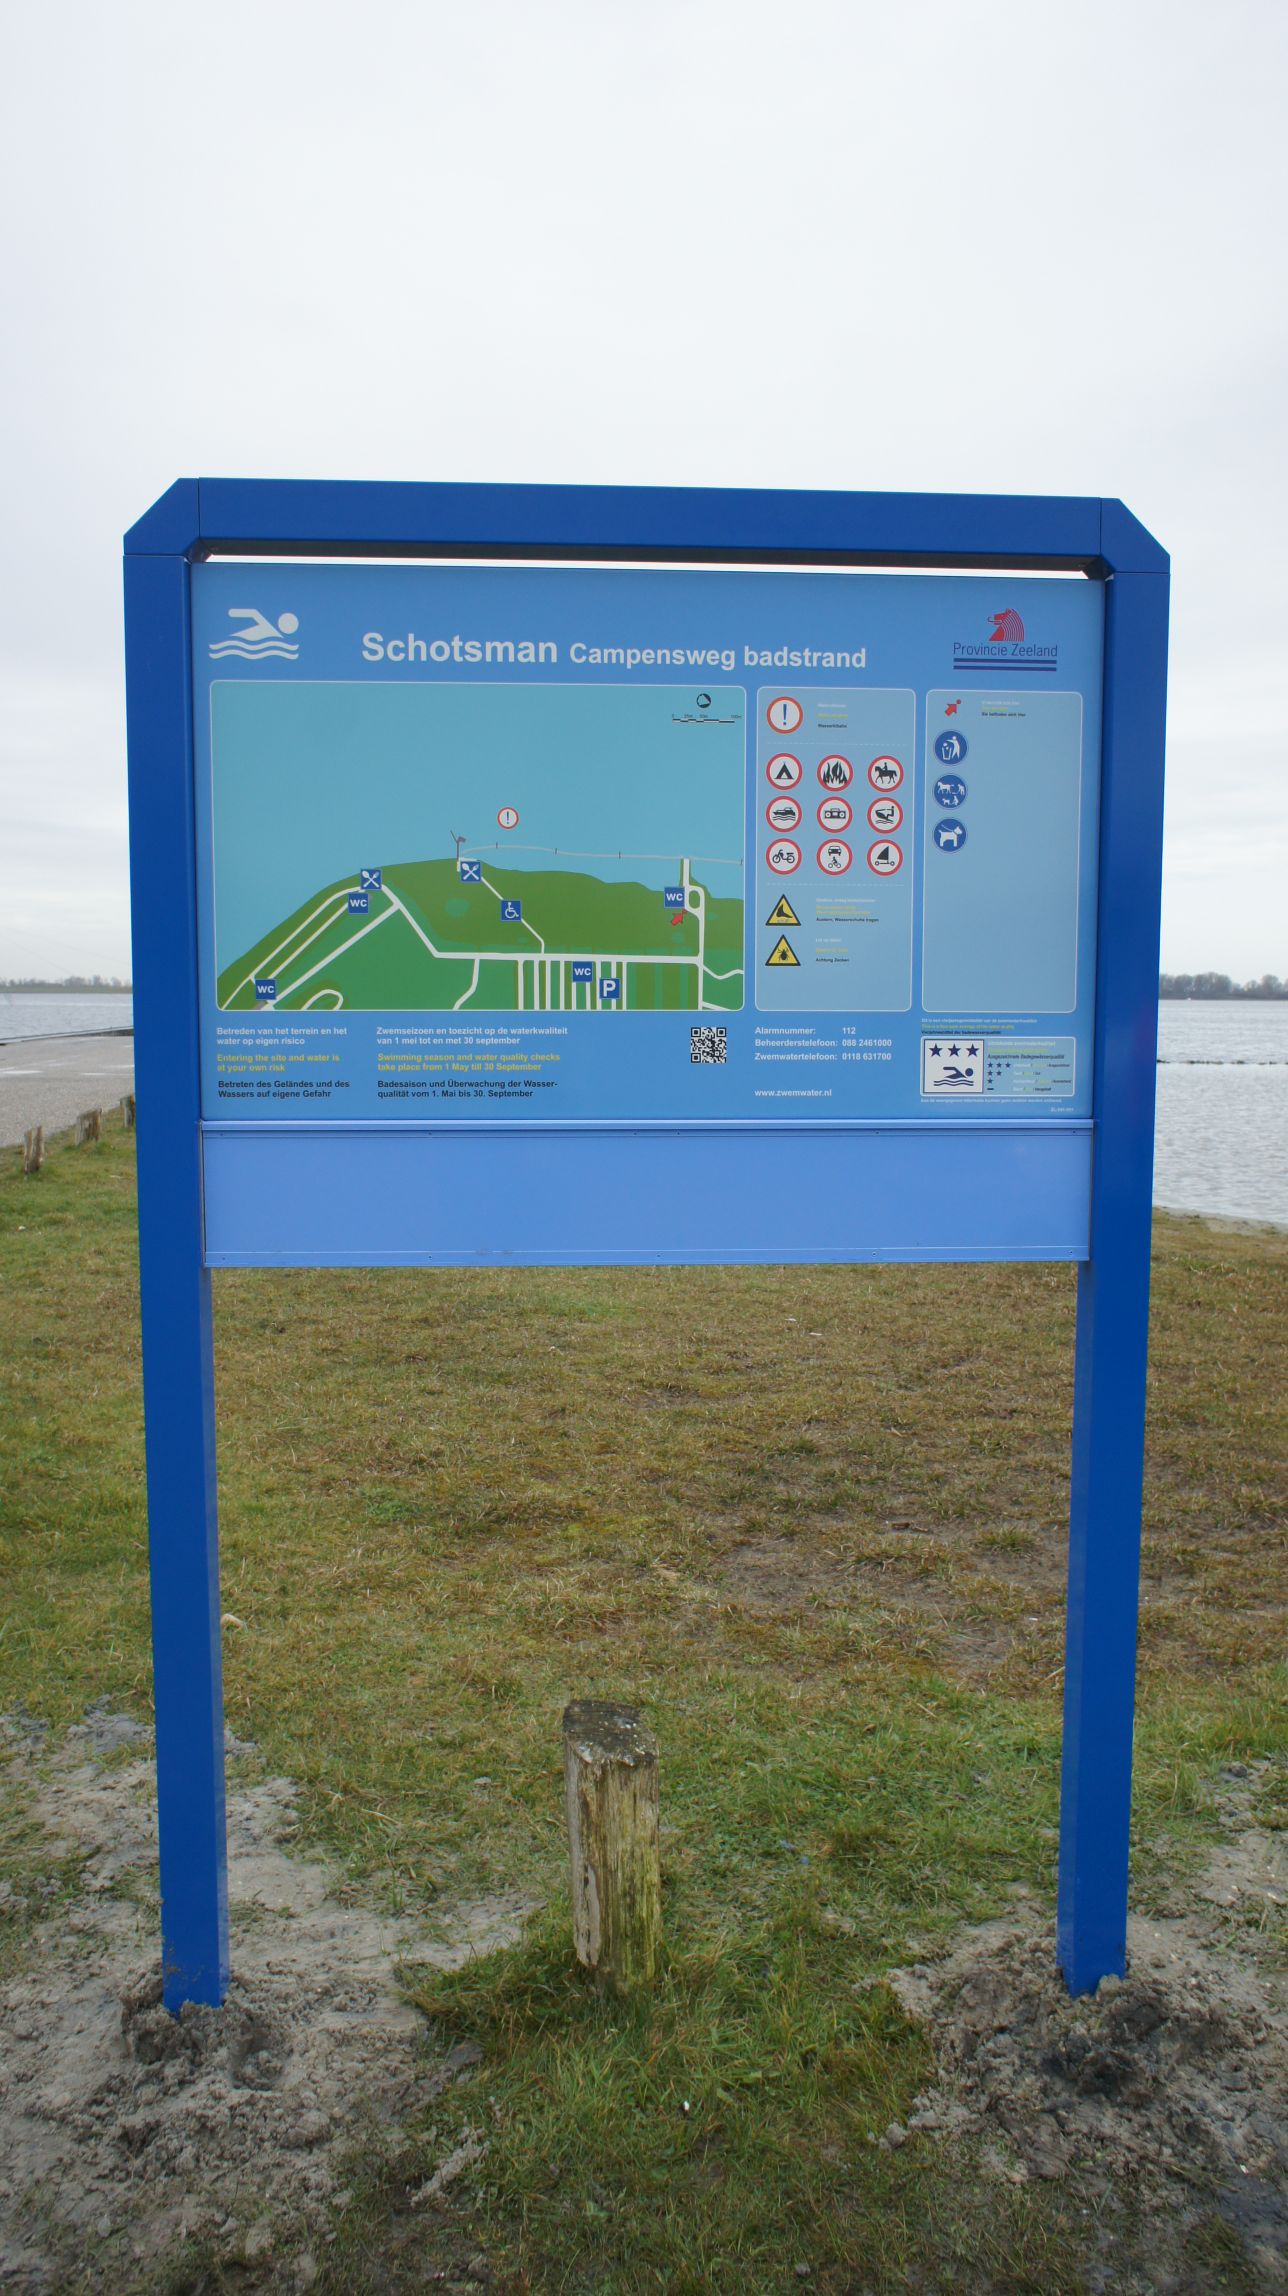 The information board at the swimming location Schotsman Campensweg Badstrand